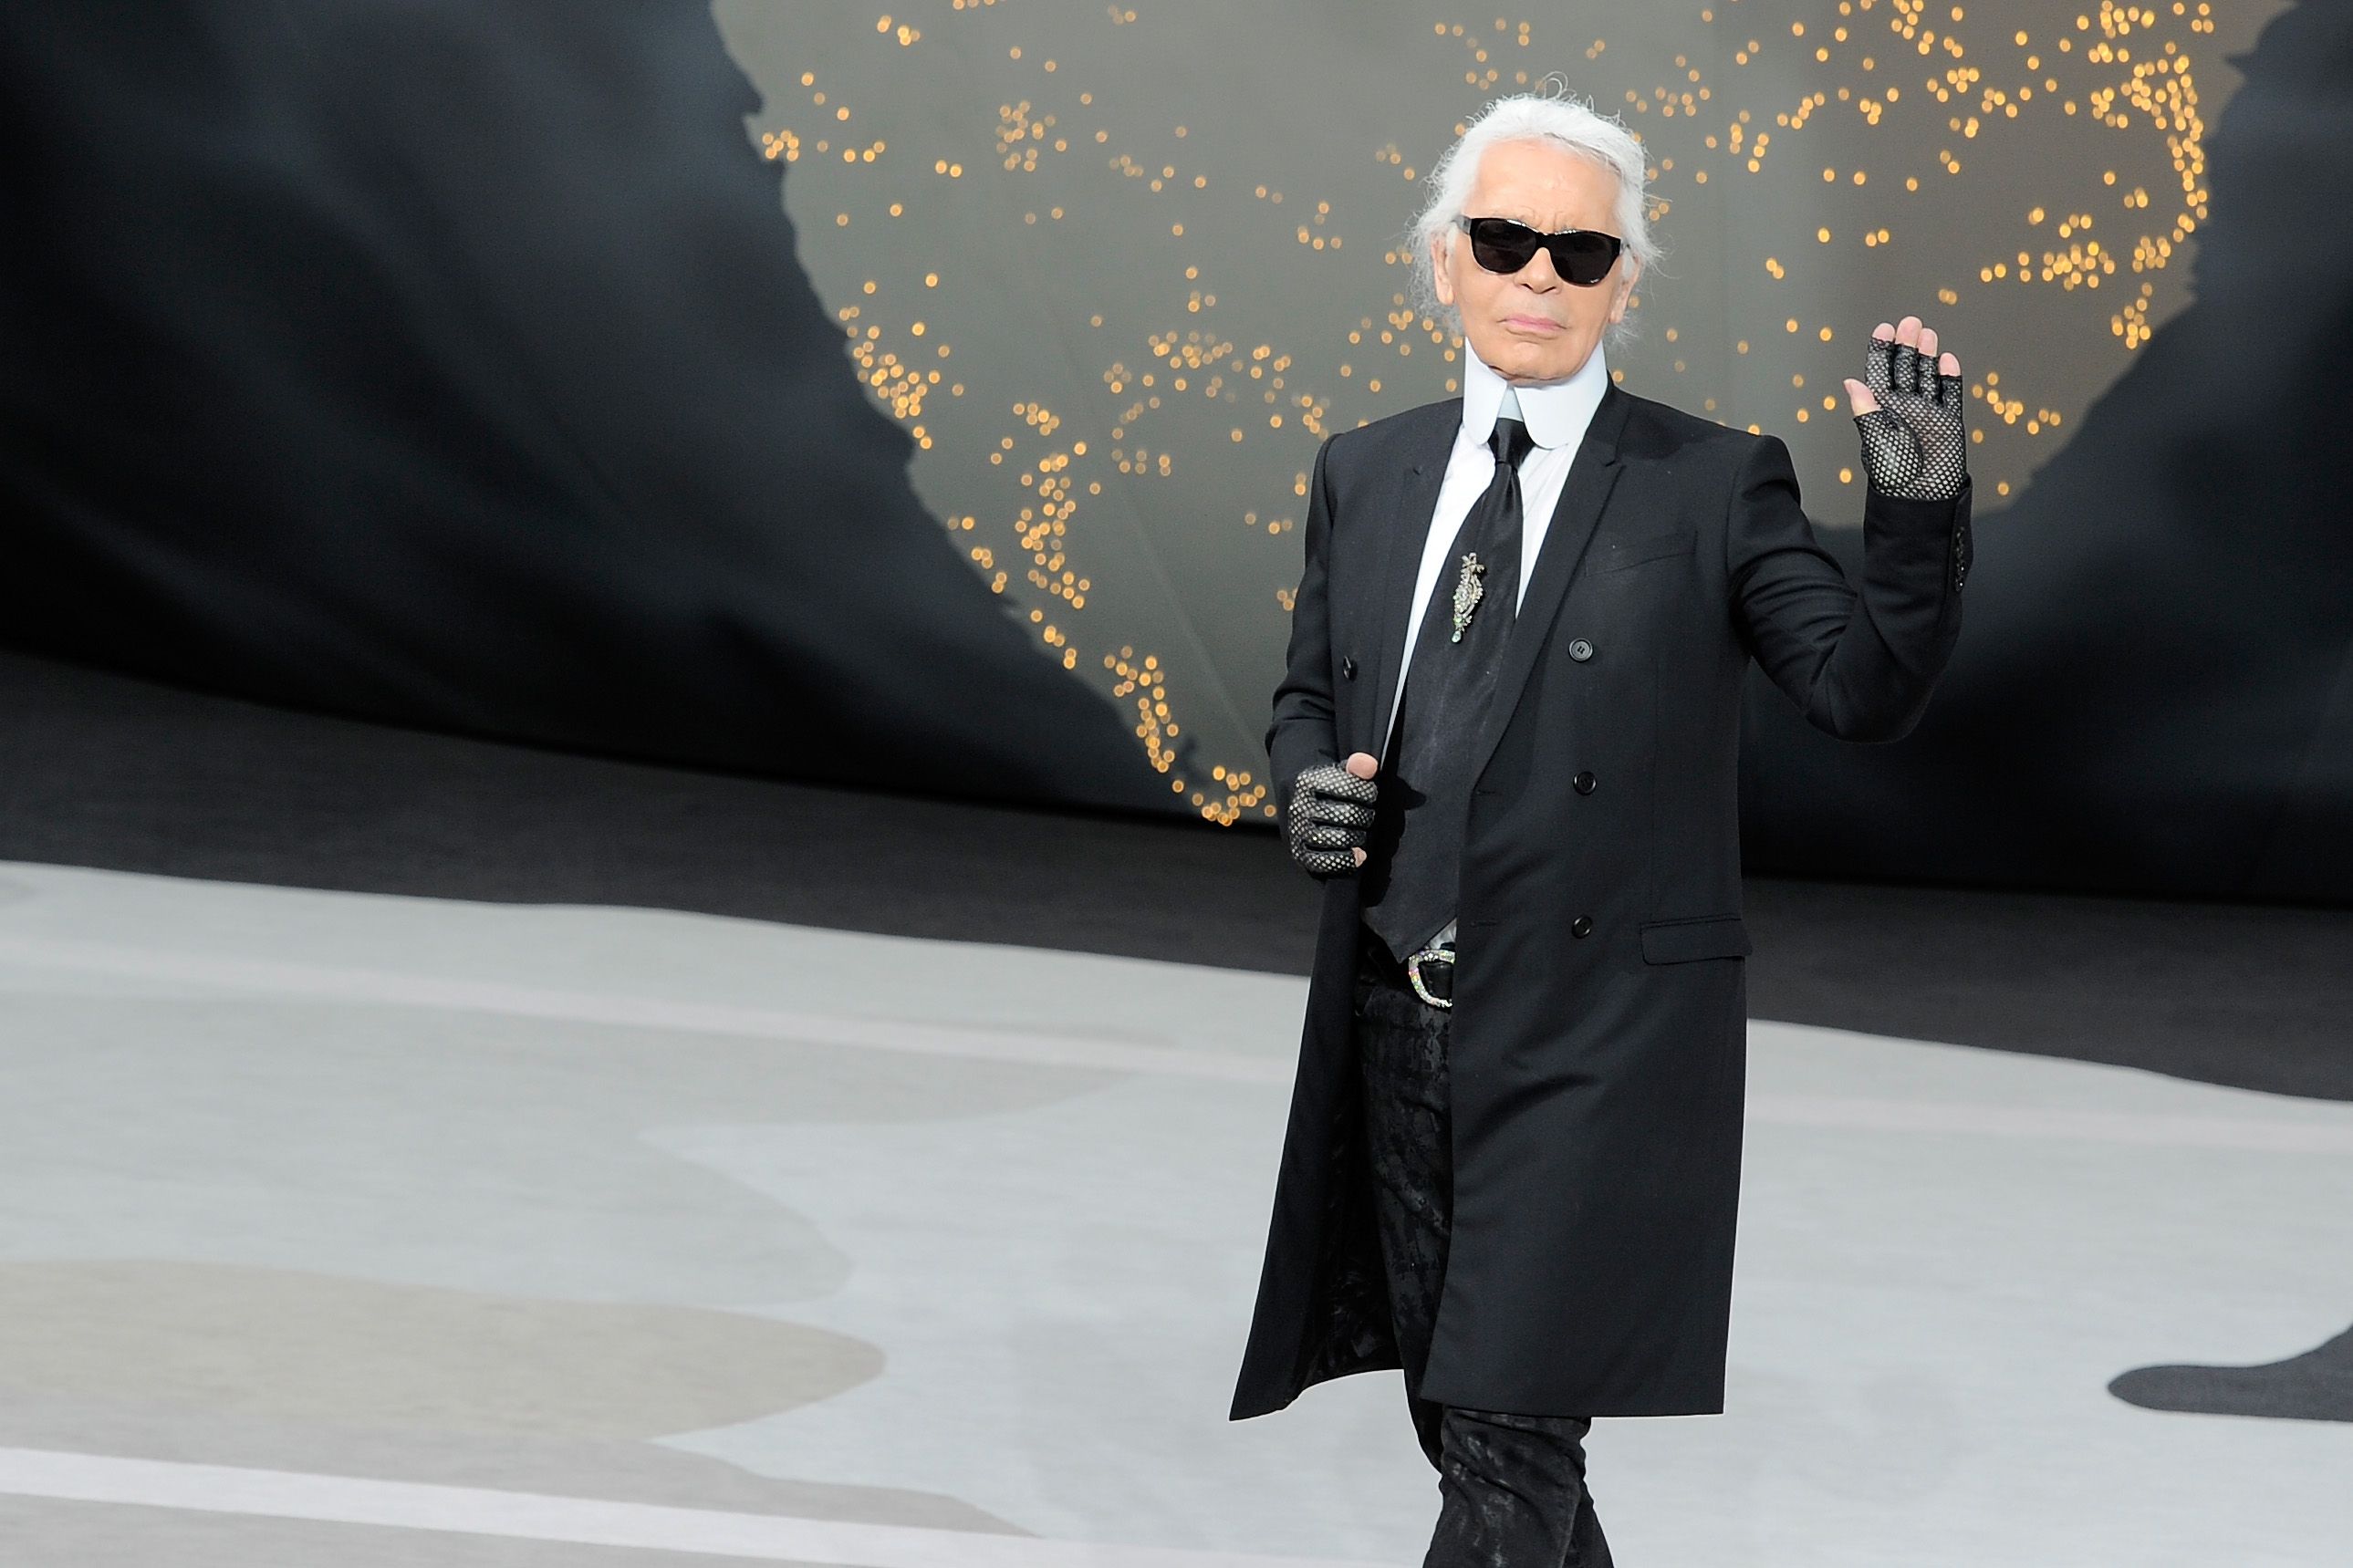 Karl Lagerfeld's best Chanel looks, as the designer passes away